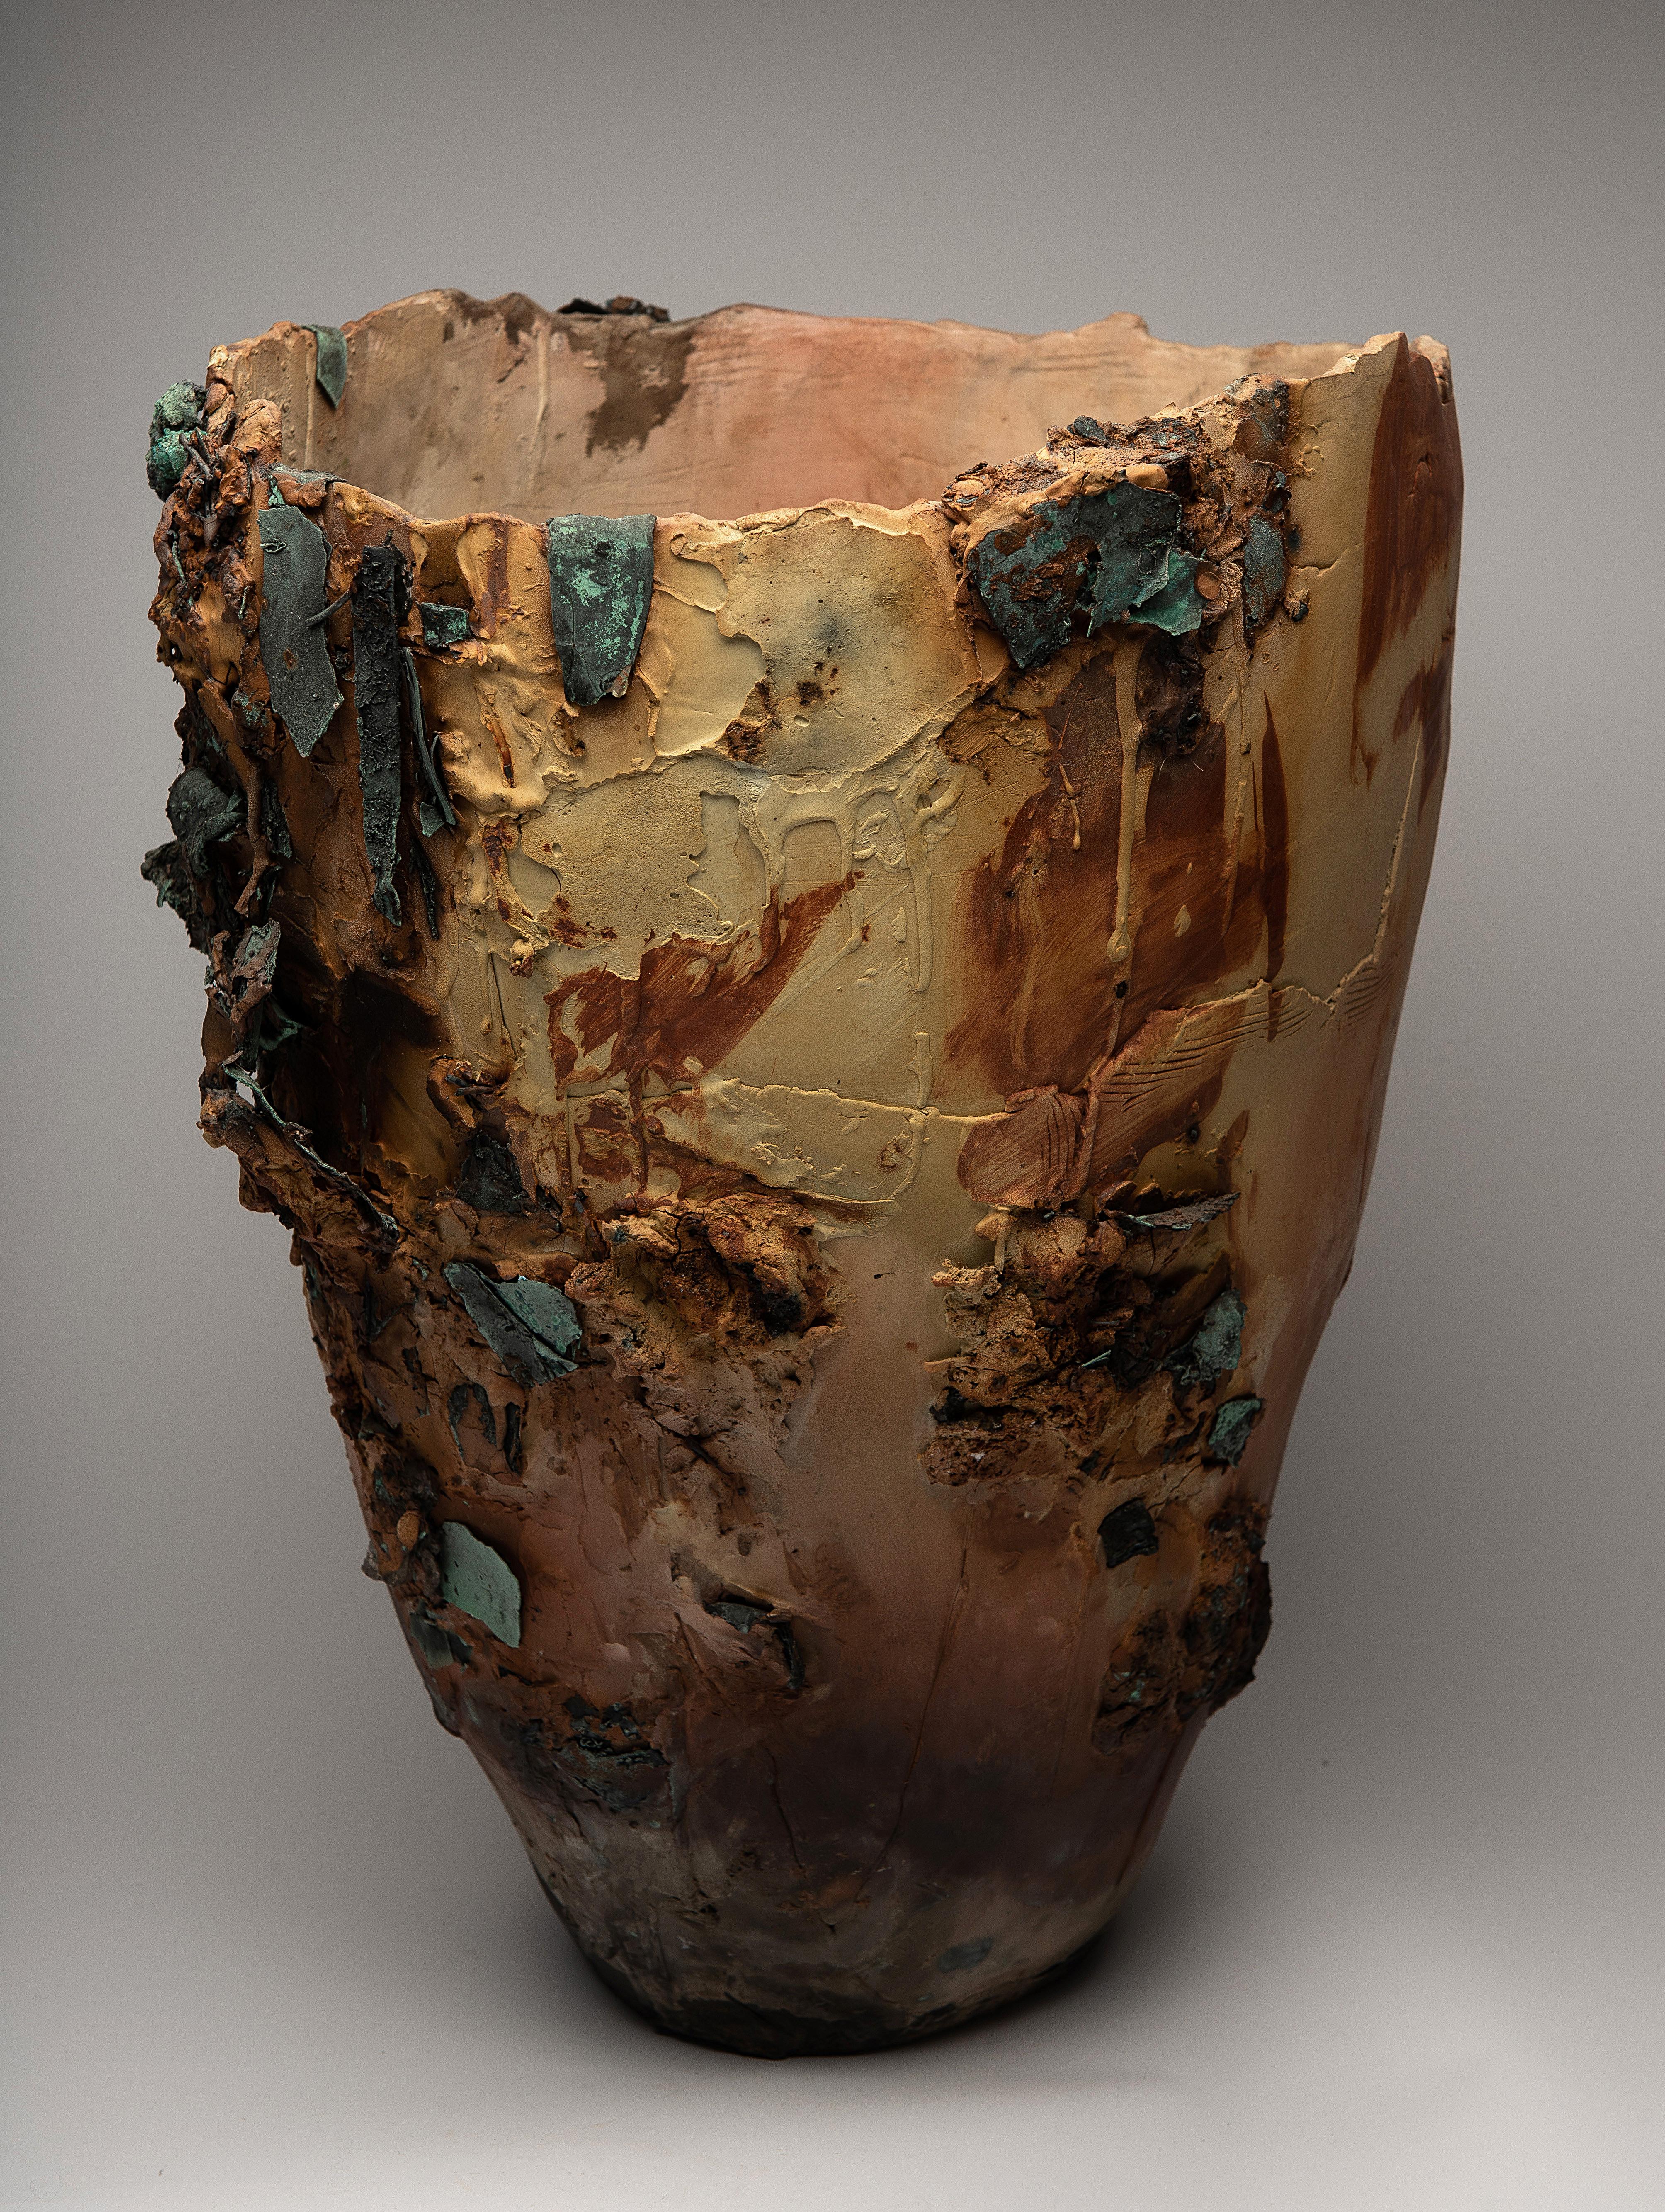 Alison Brannen Abstract Sculpture - "Magma", ceramic sculpture, porcelain vase, saggar, copper earth, burnt offering